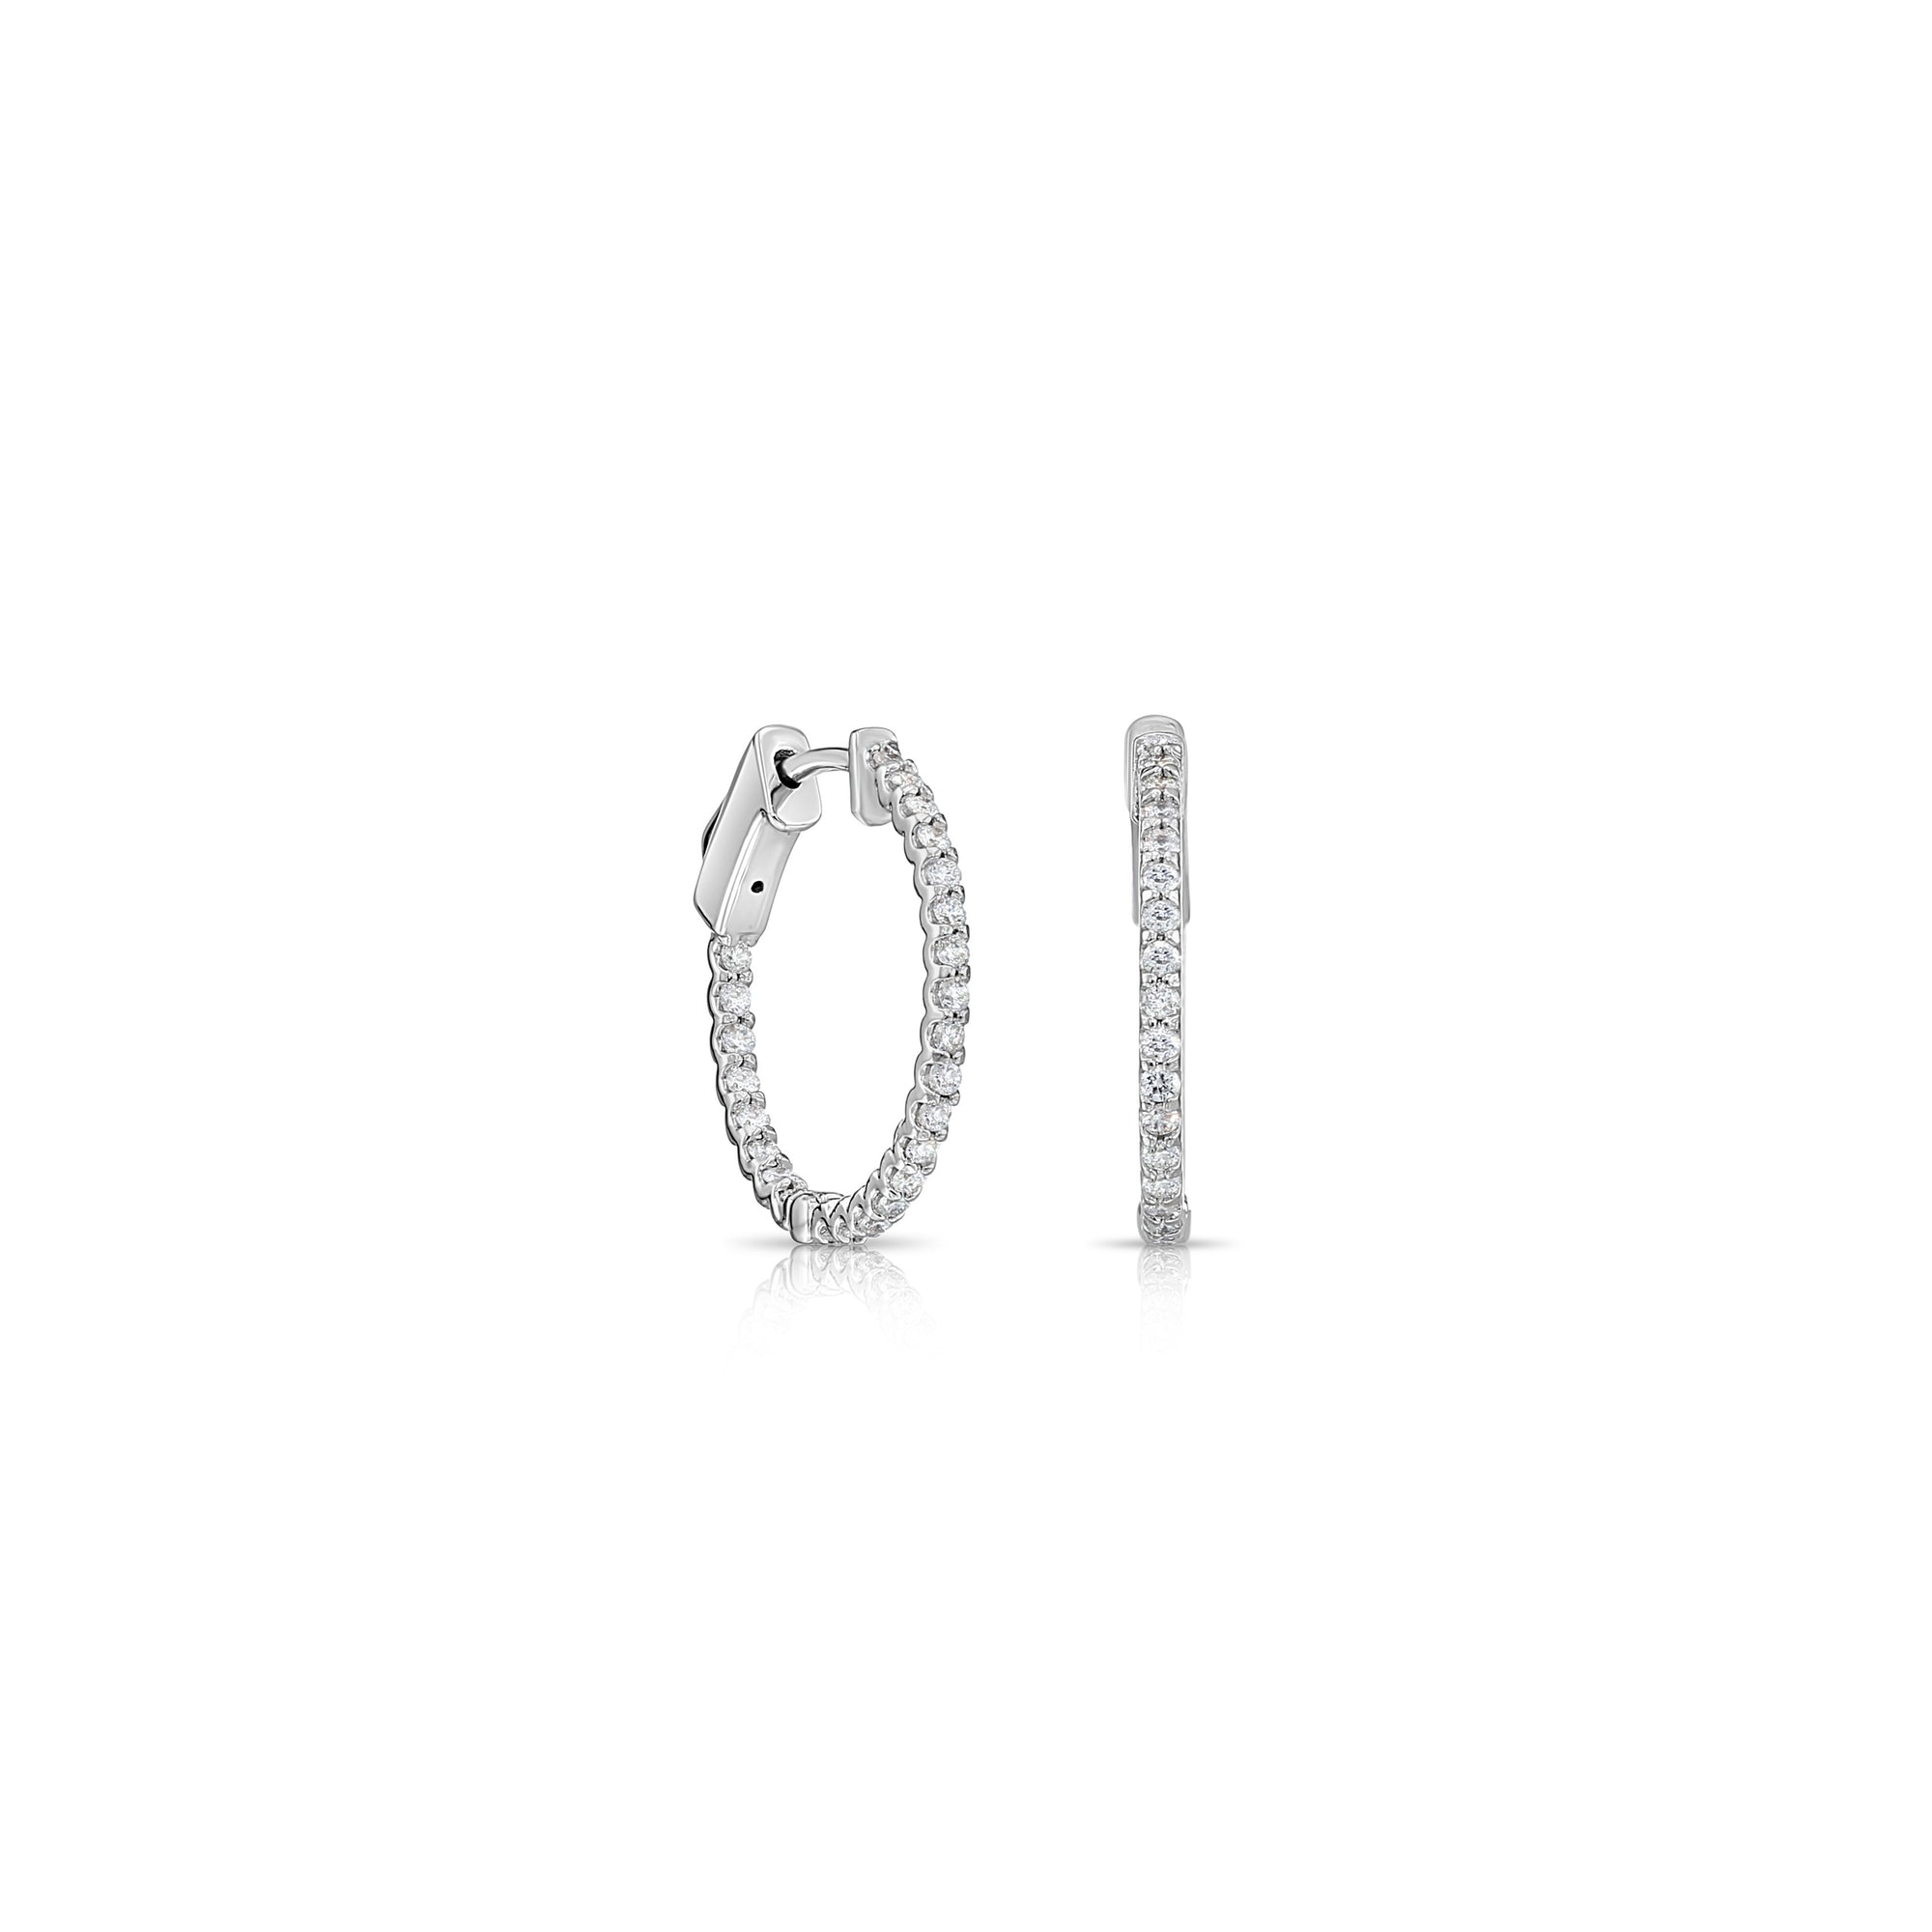 14k White Gold Diamond Hoop Earrings, 0.52 carats